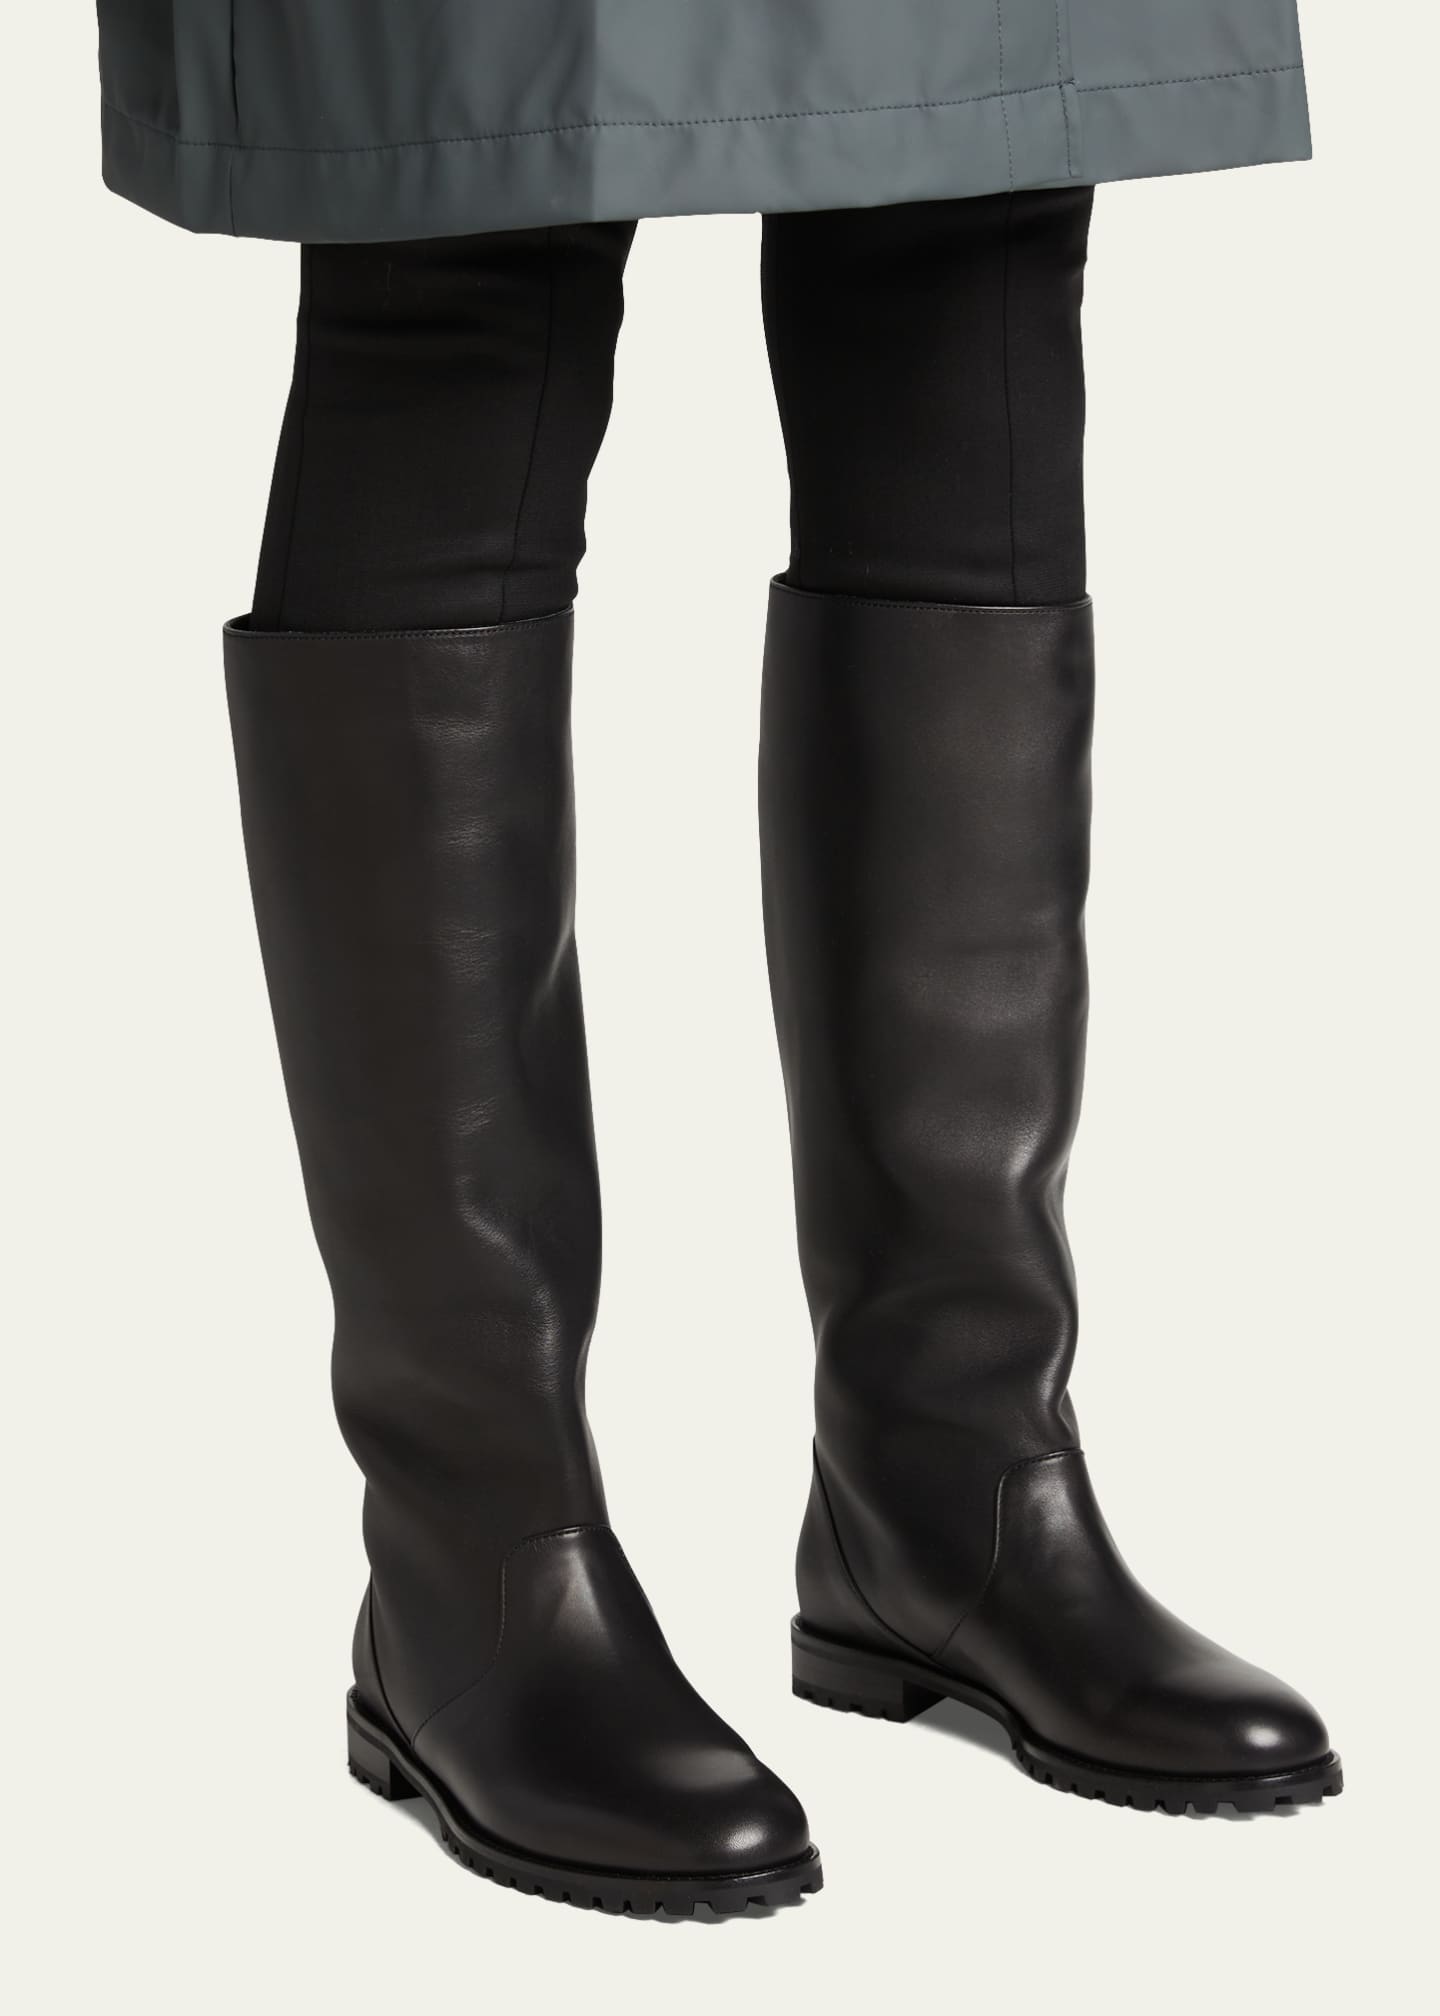 Manolo Blahnik Motosahi Tall Lug-Sole Leather Boots - Bergdorf Goodman